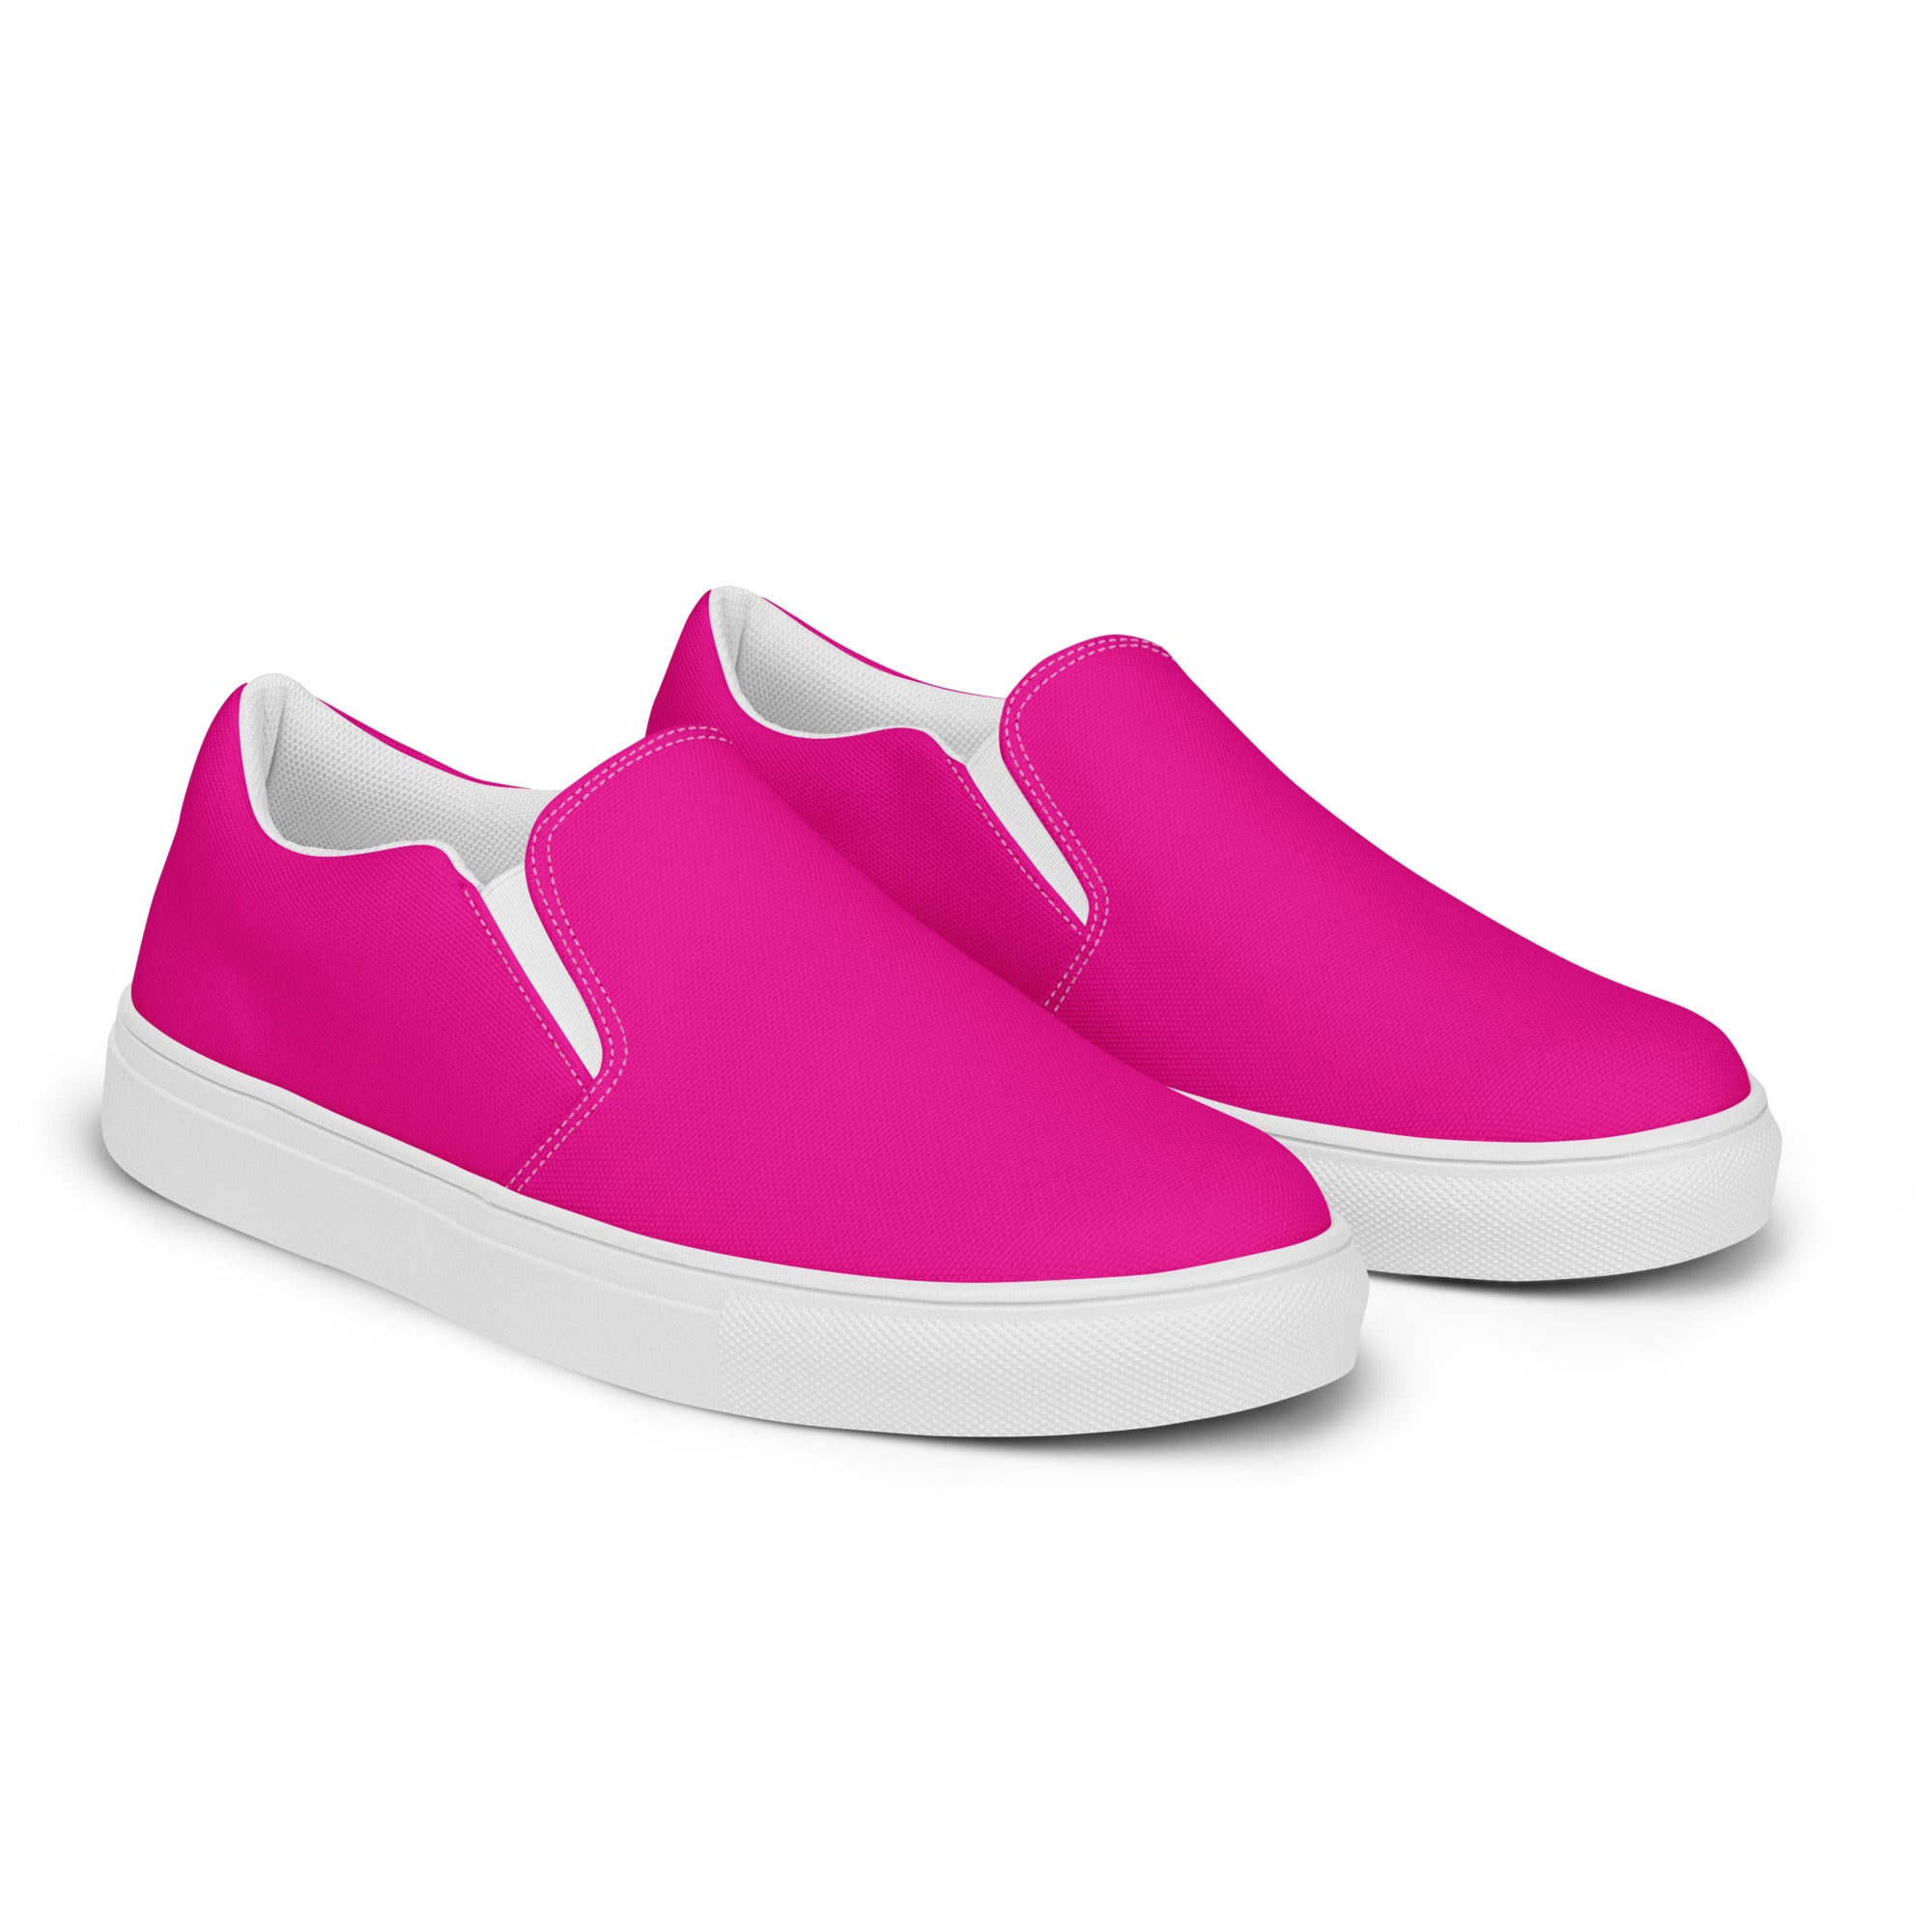 Rad Palm Pink Men’s Slip-On Canvas Shoes